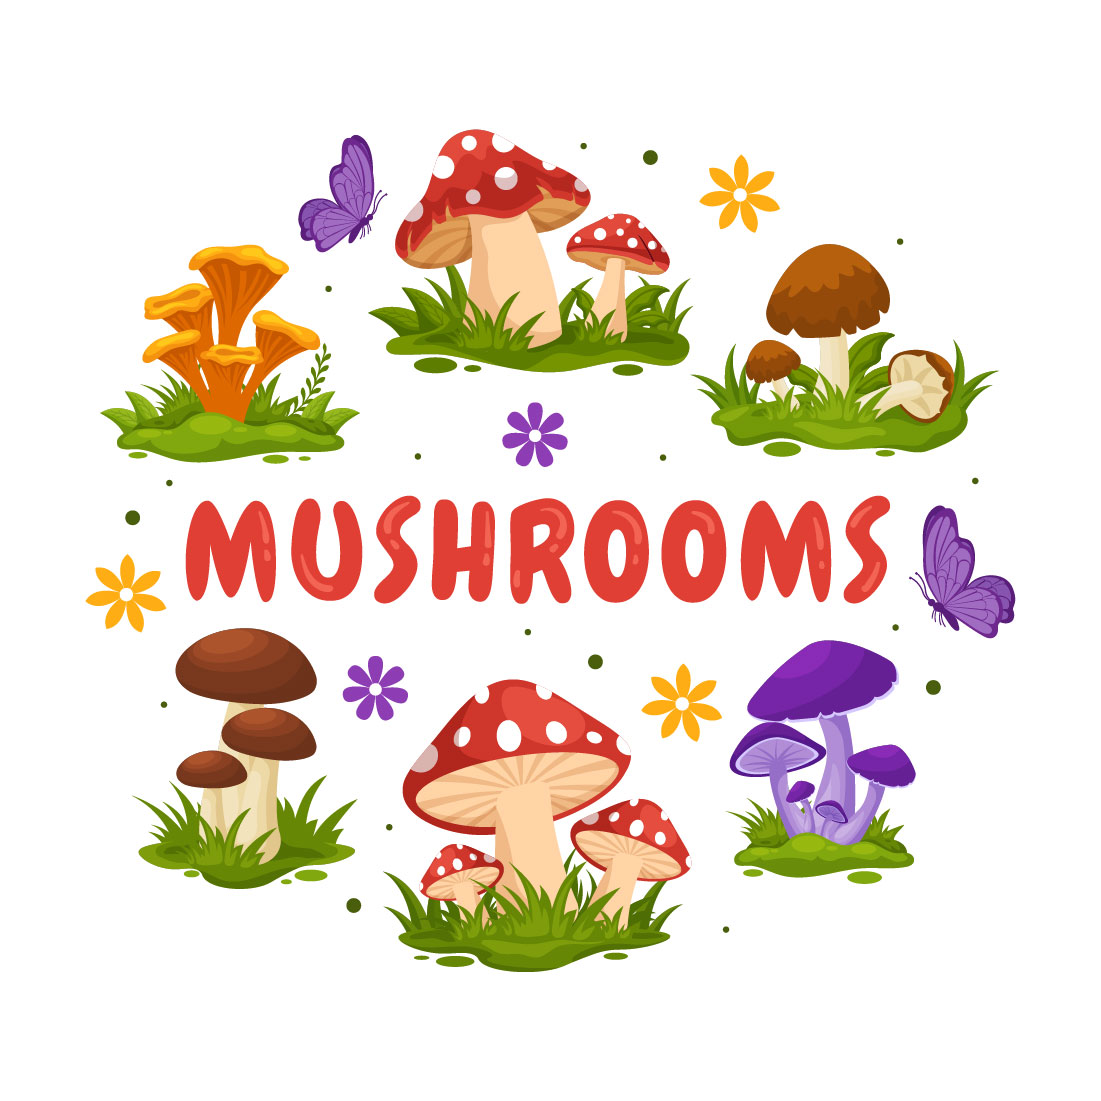 13 Mushrooms Design Illustration cover image.